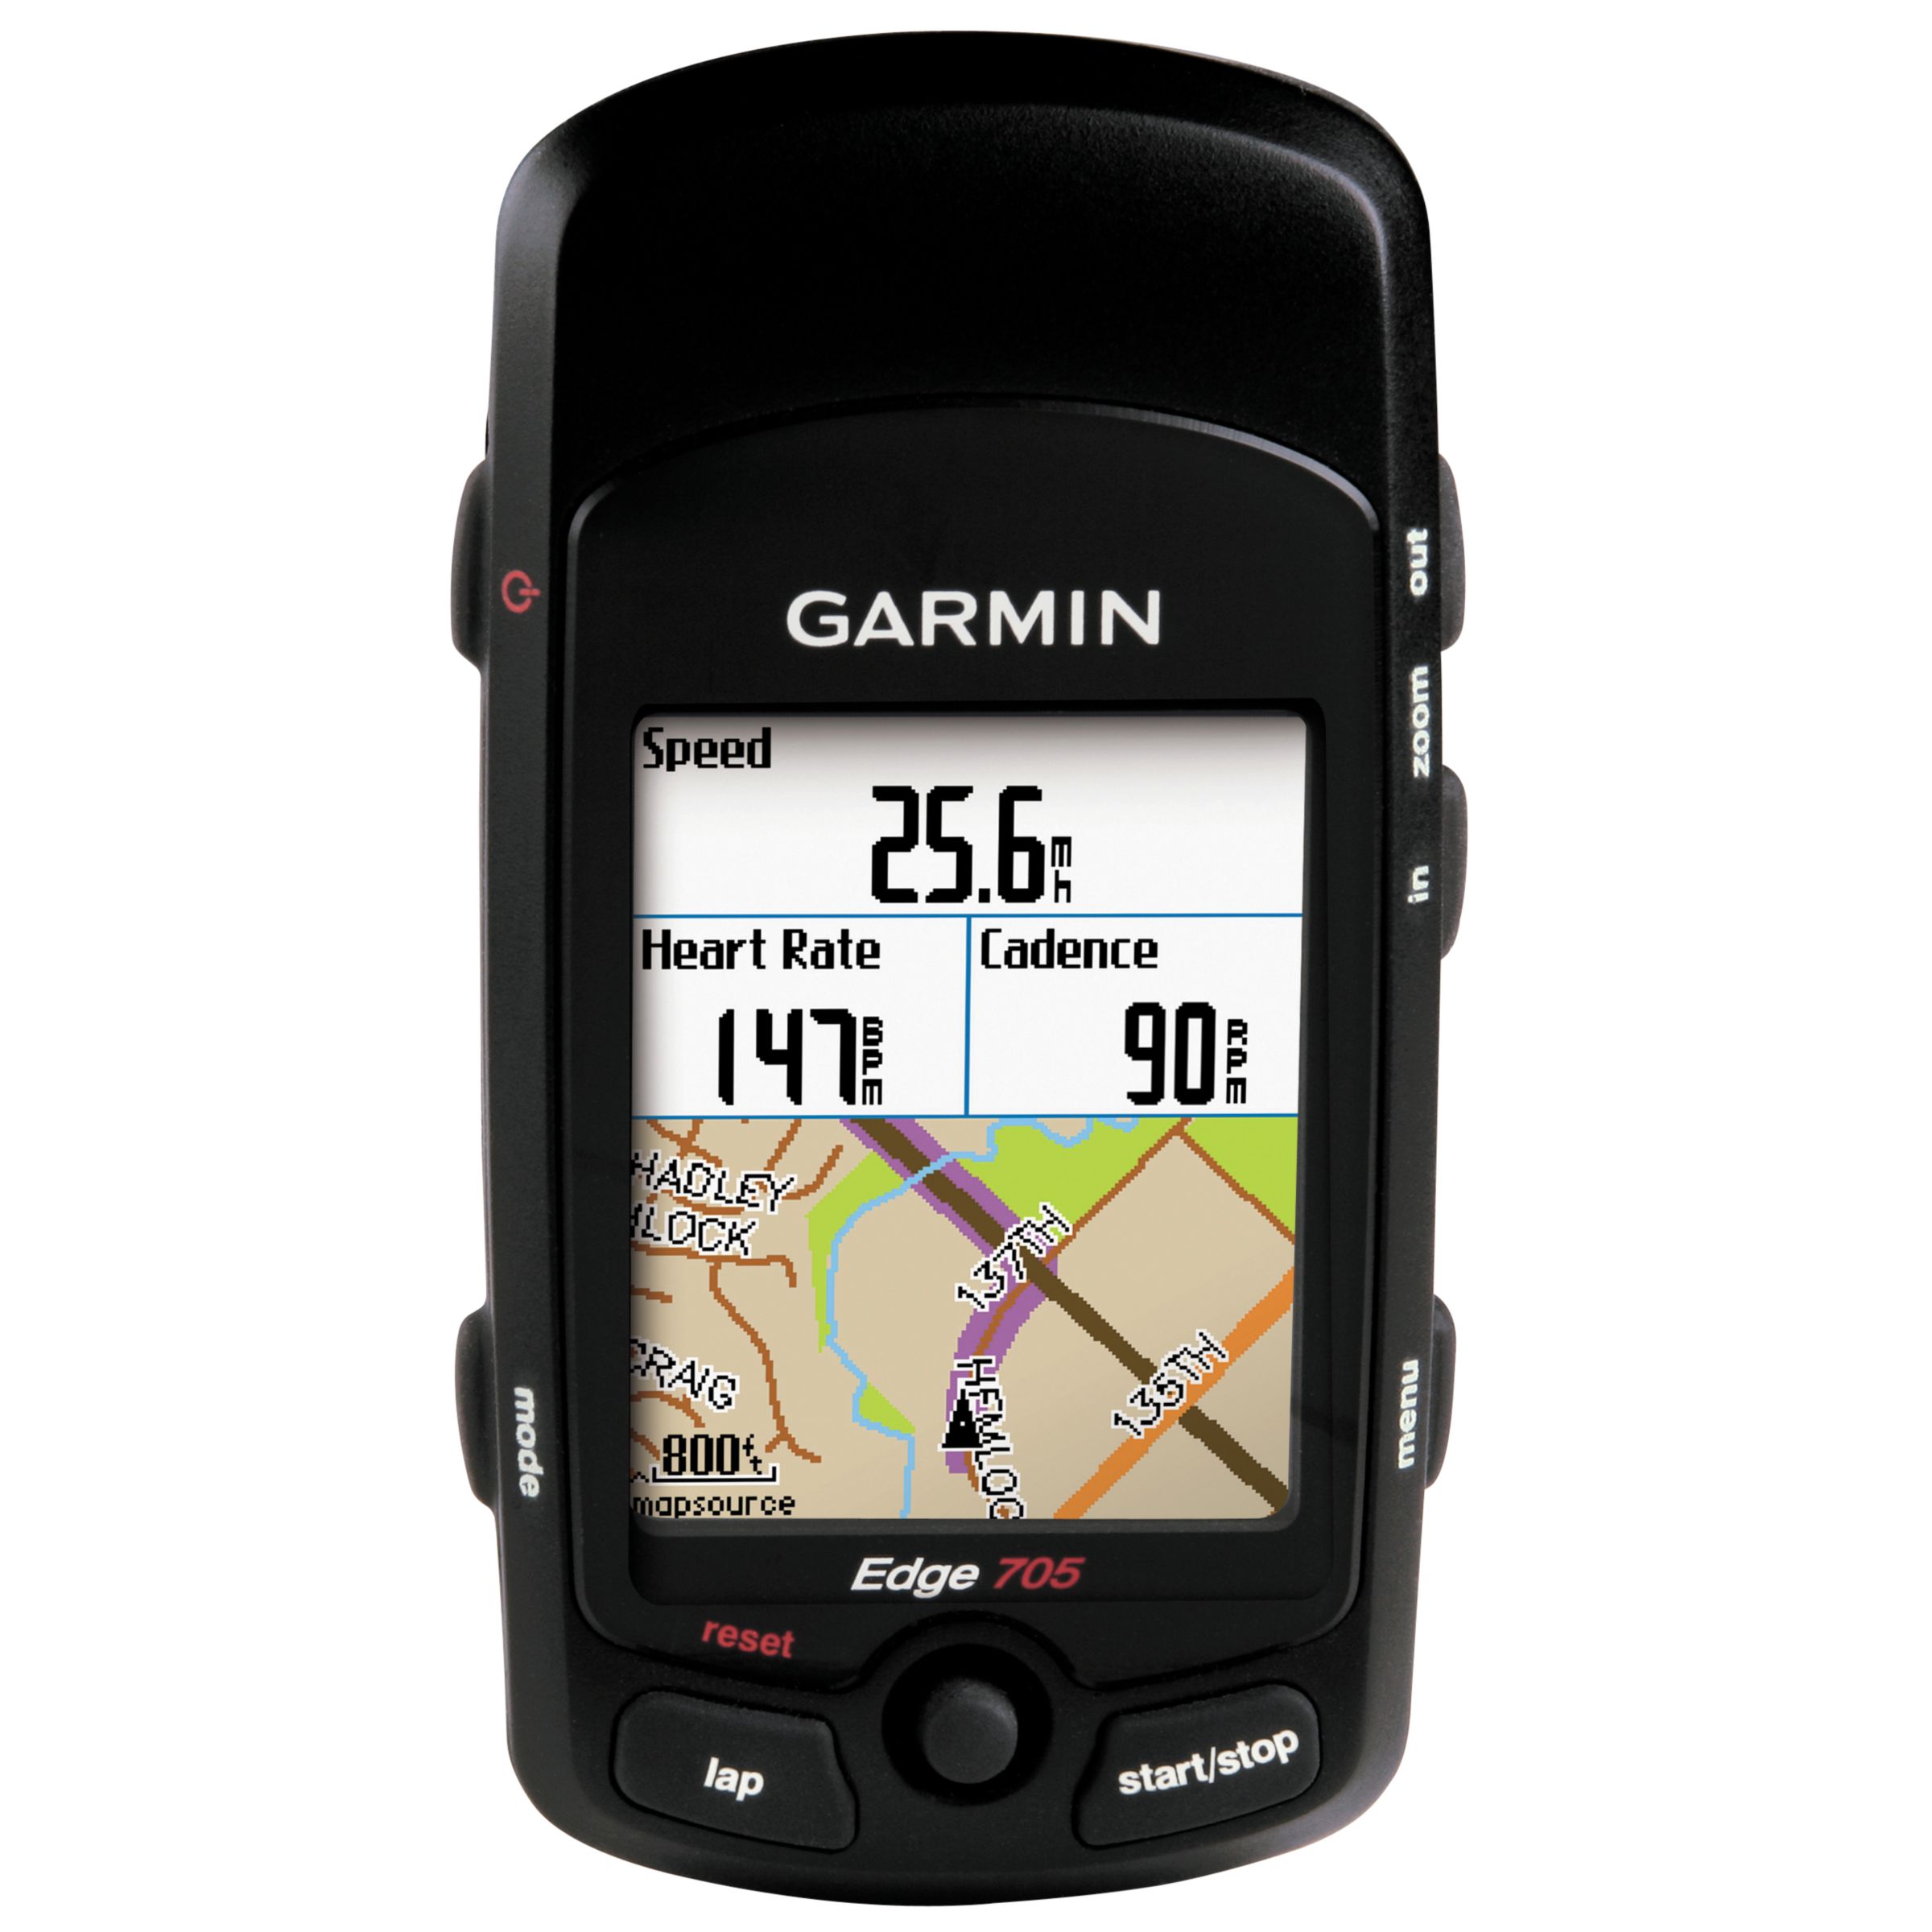 Garmin Edge 705 Cycle GPS Receiver at John Lewis